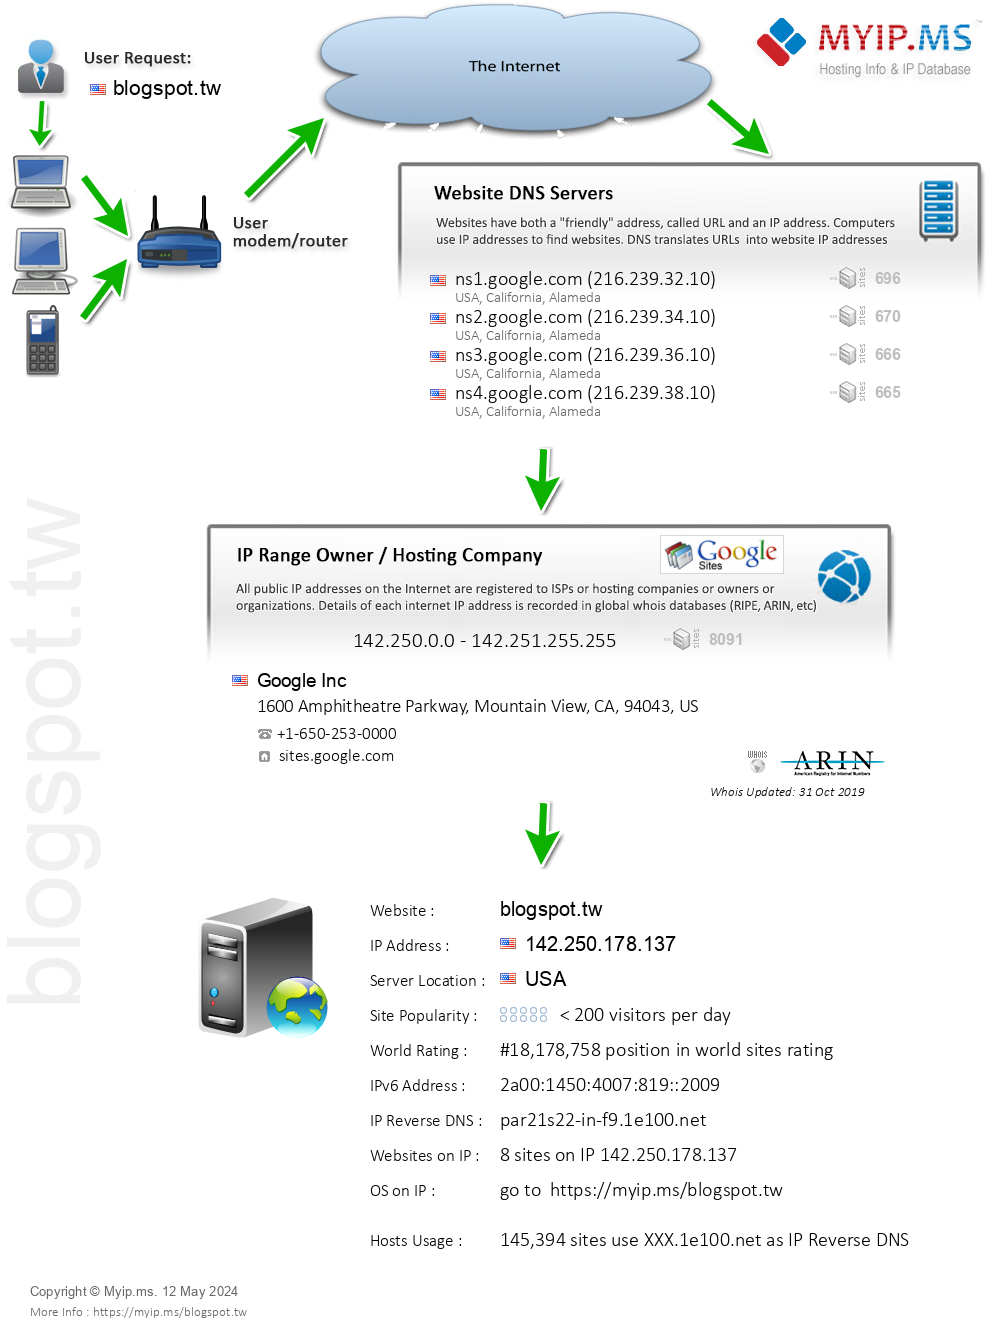 Blogspot.tw - Website Hosting Visual IP Diagram